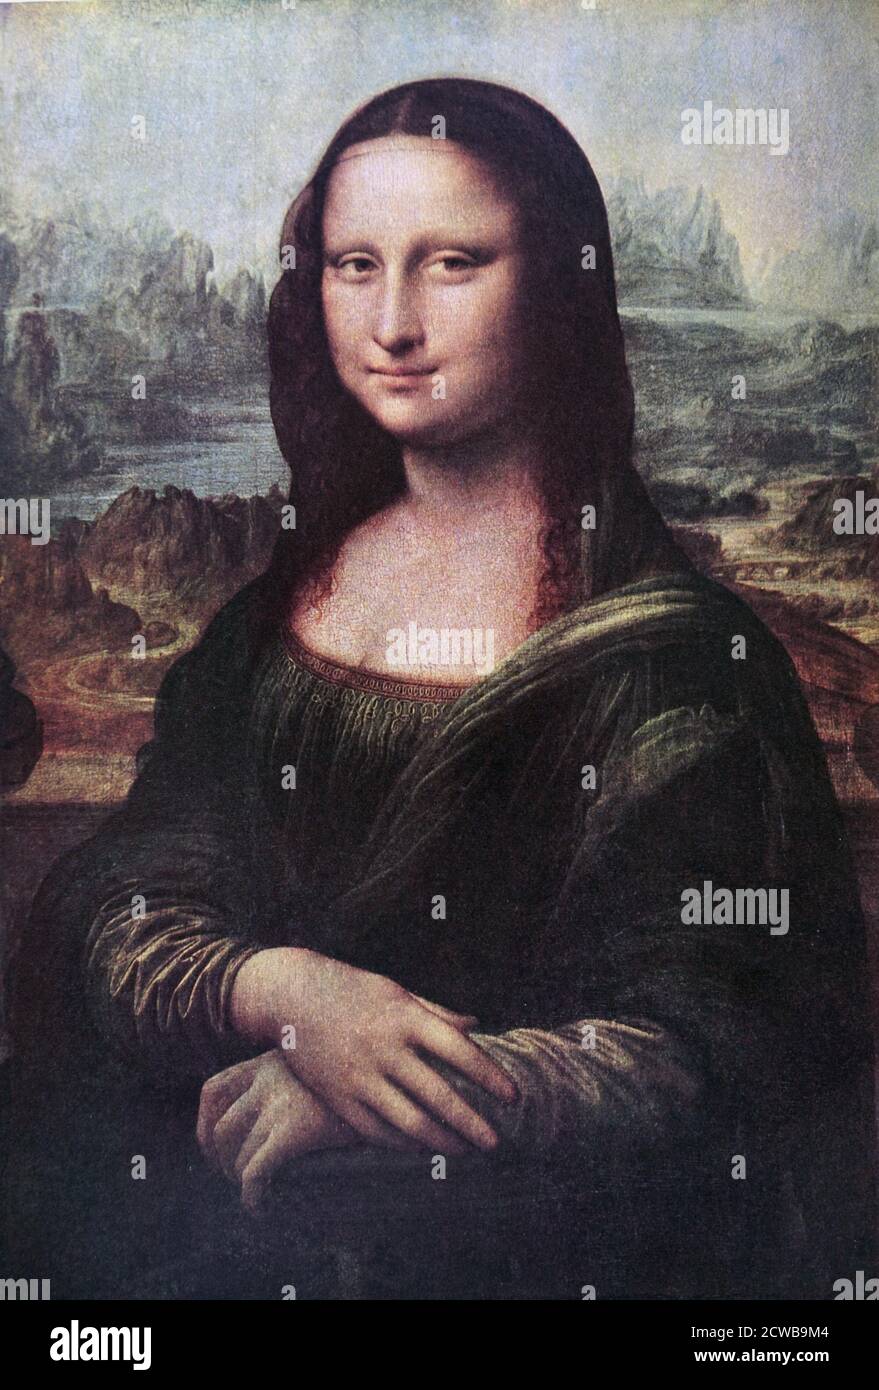 Painting titled 'Mona Lisa' By Leonardo Da Vinci. Leonardo Da Vinci (1452-1519) an Italian polymath of the Renaissance Stock Photo